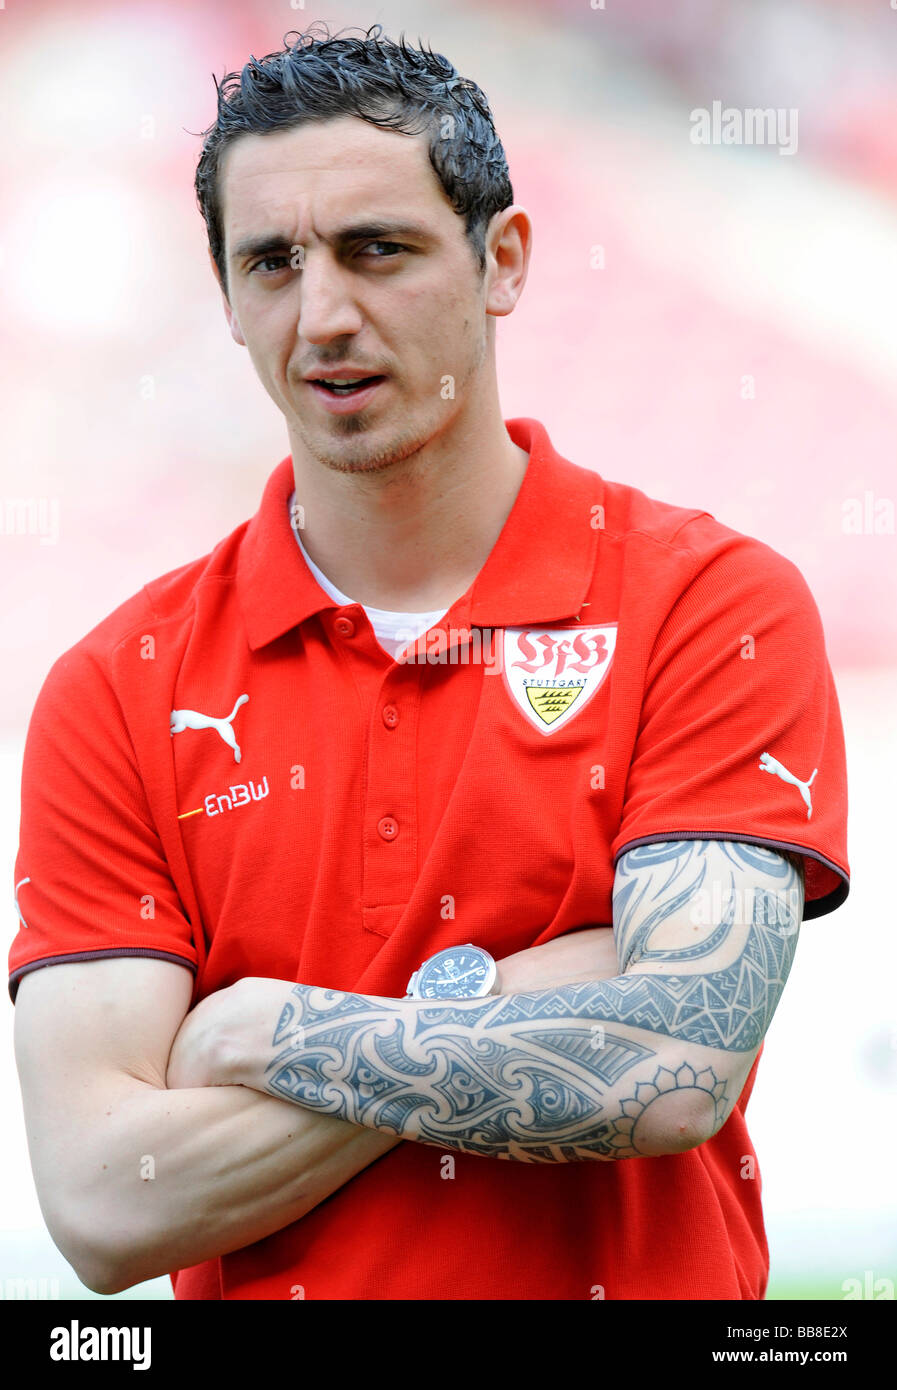 Roberto Hilbert, joueur de football international allemand, le VfB Stuttgart, avec un bras tatoué Banque D'Images